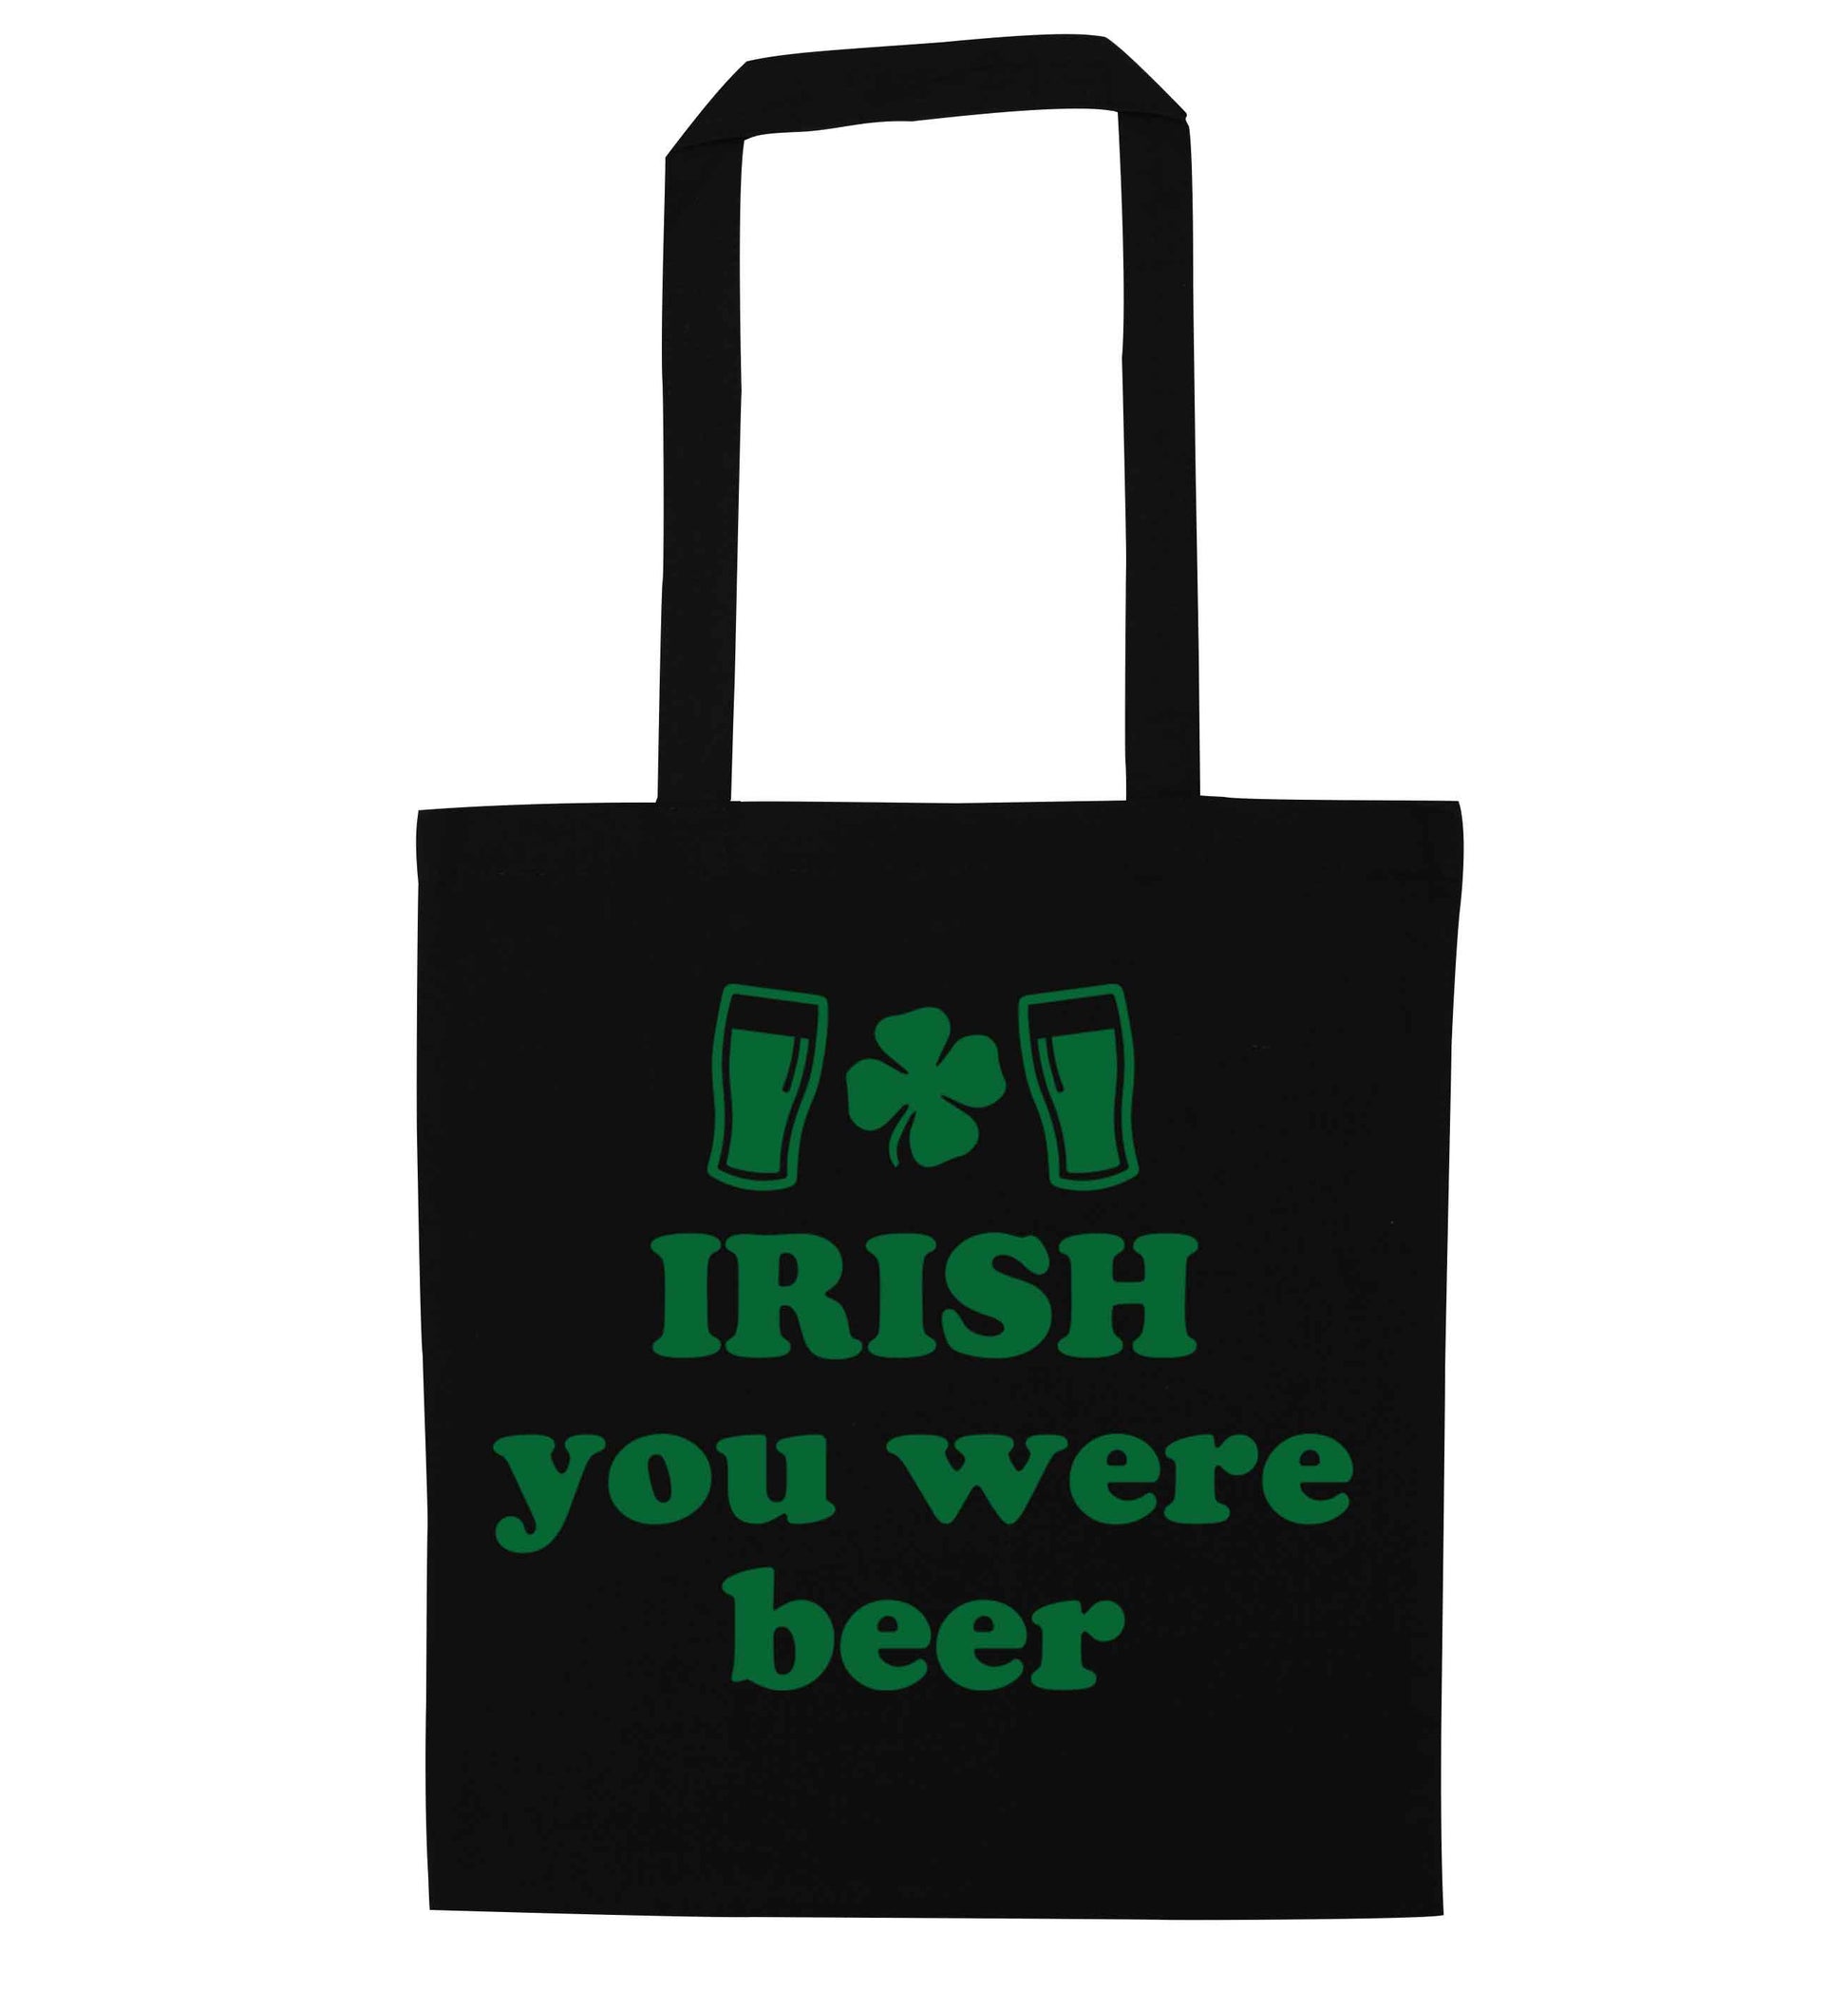 Irish you were beer black tote bag